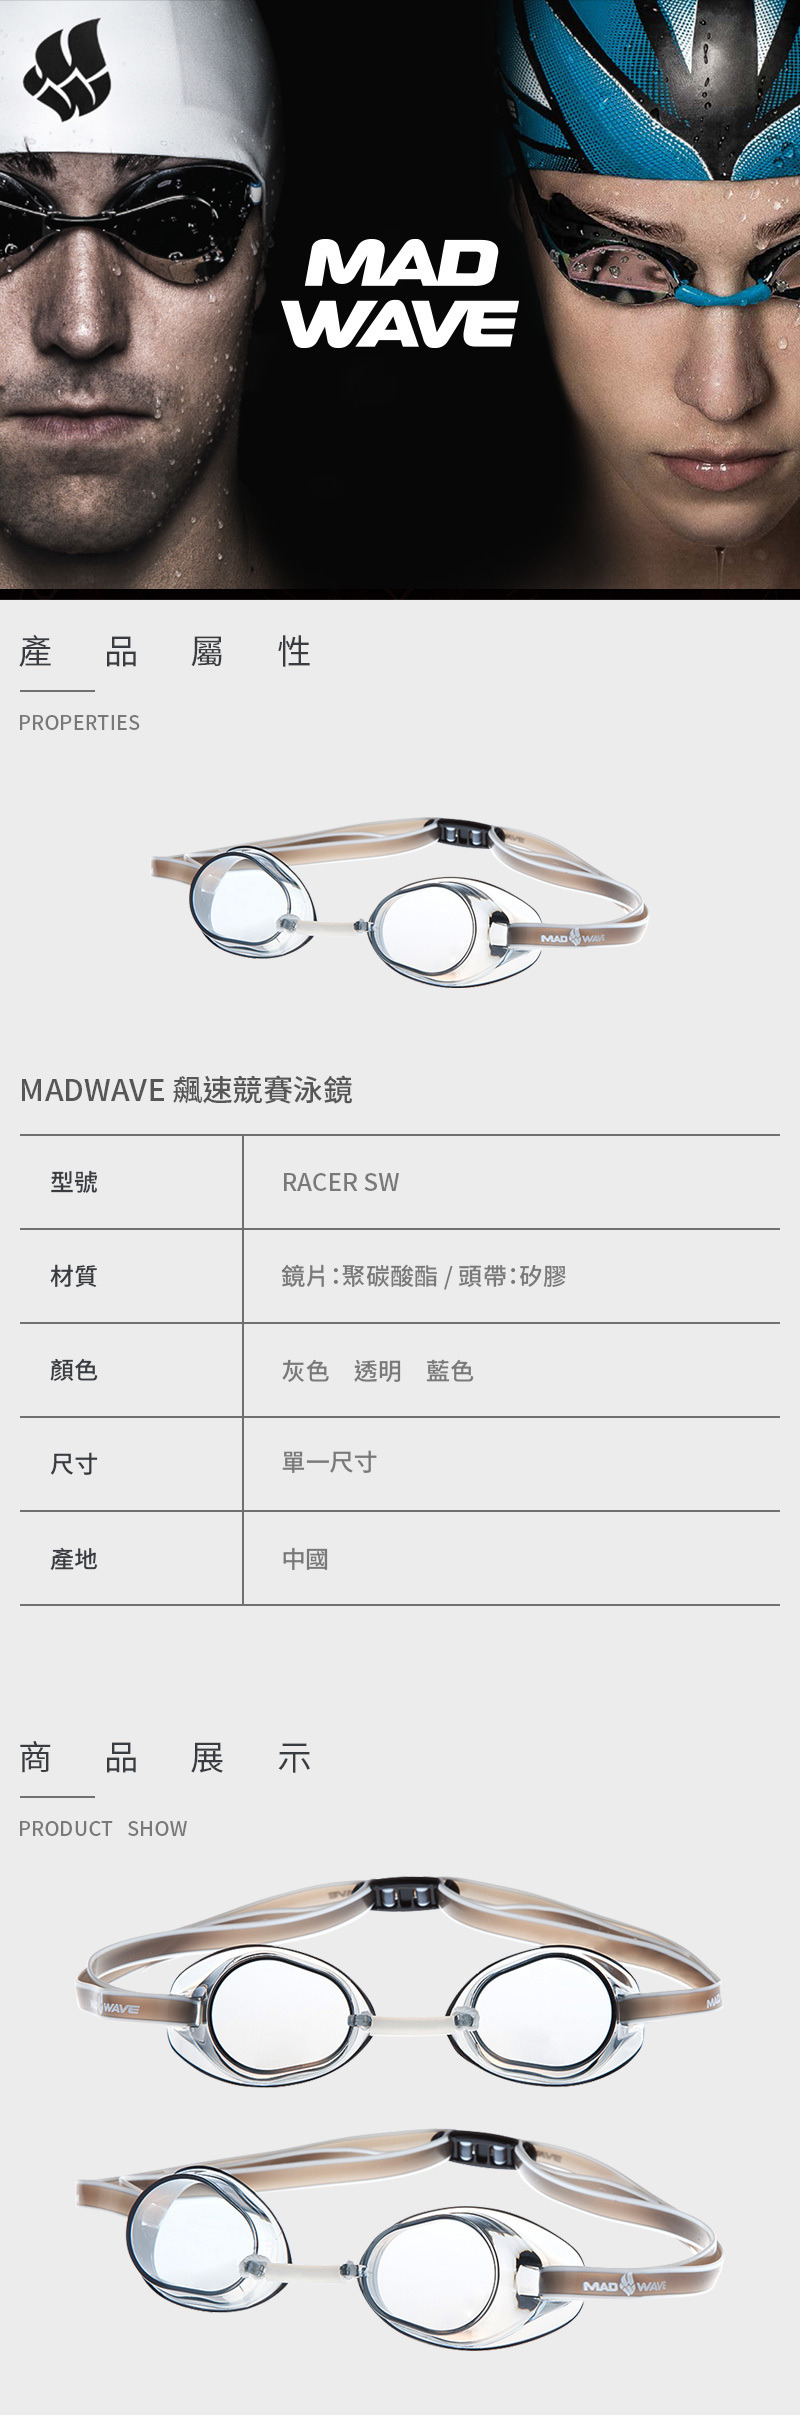 【MADWAVE】成人競速型泳鏡 RACER SW